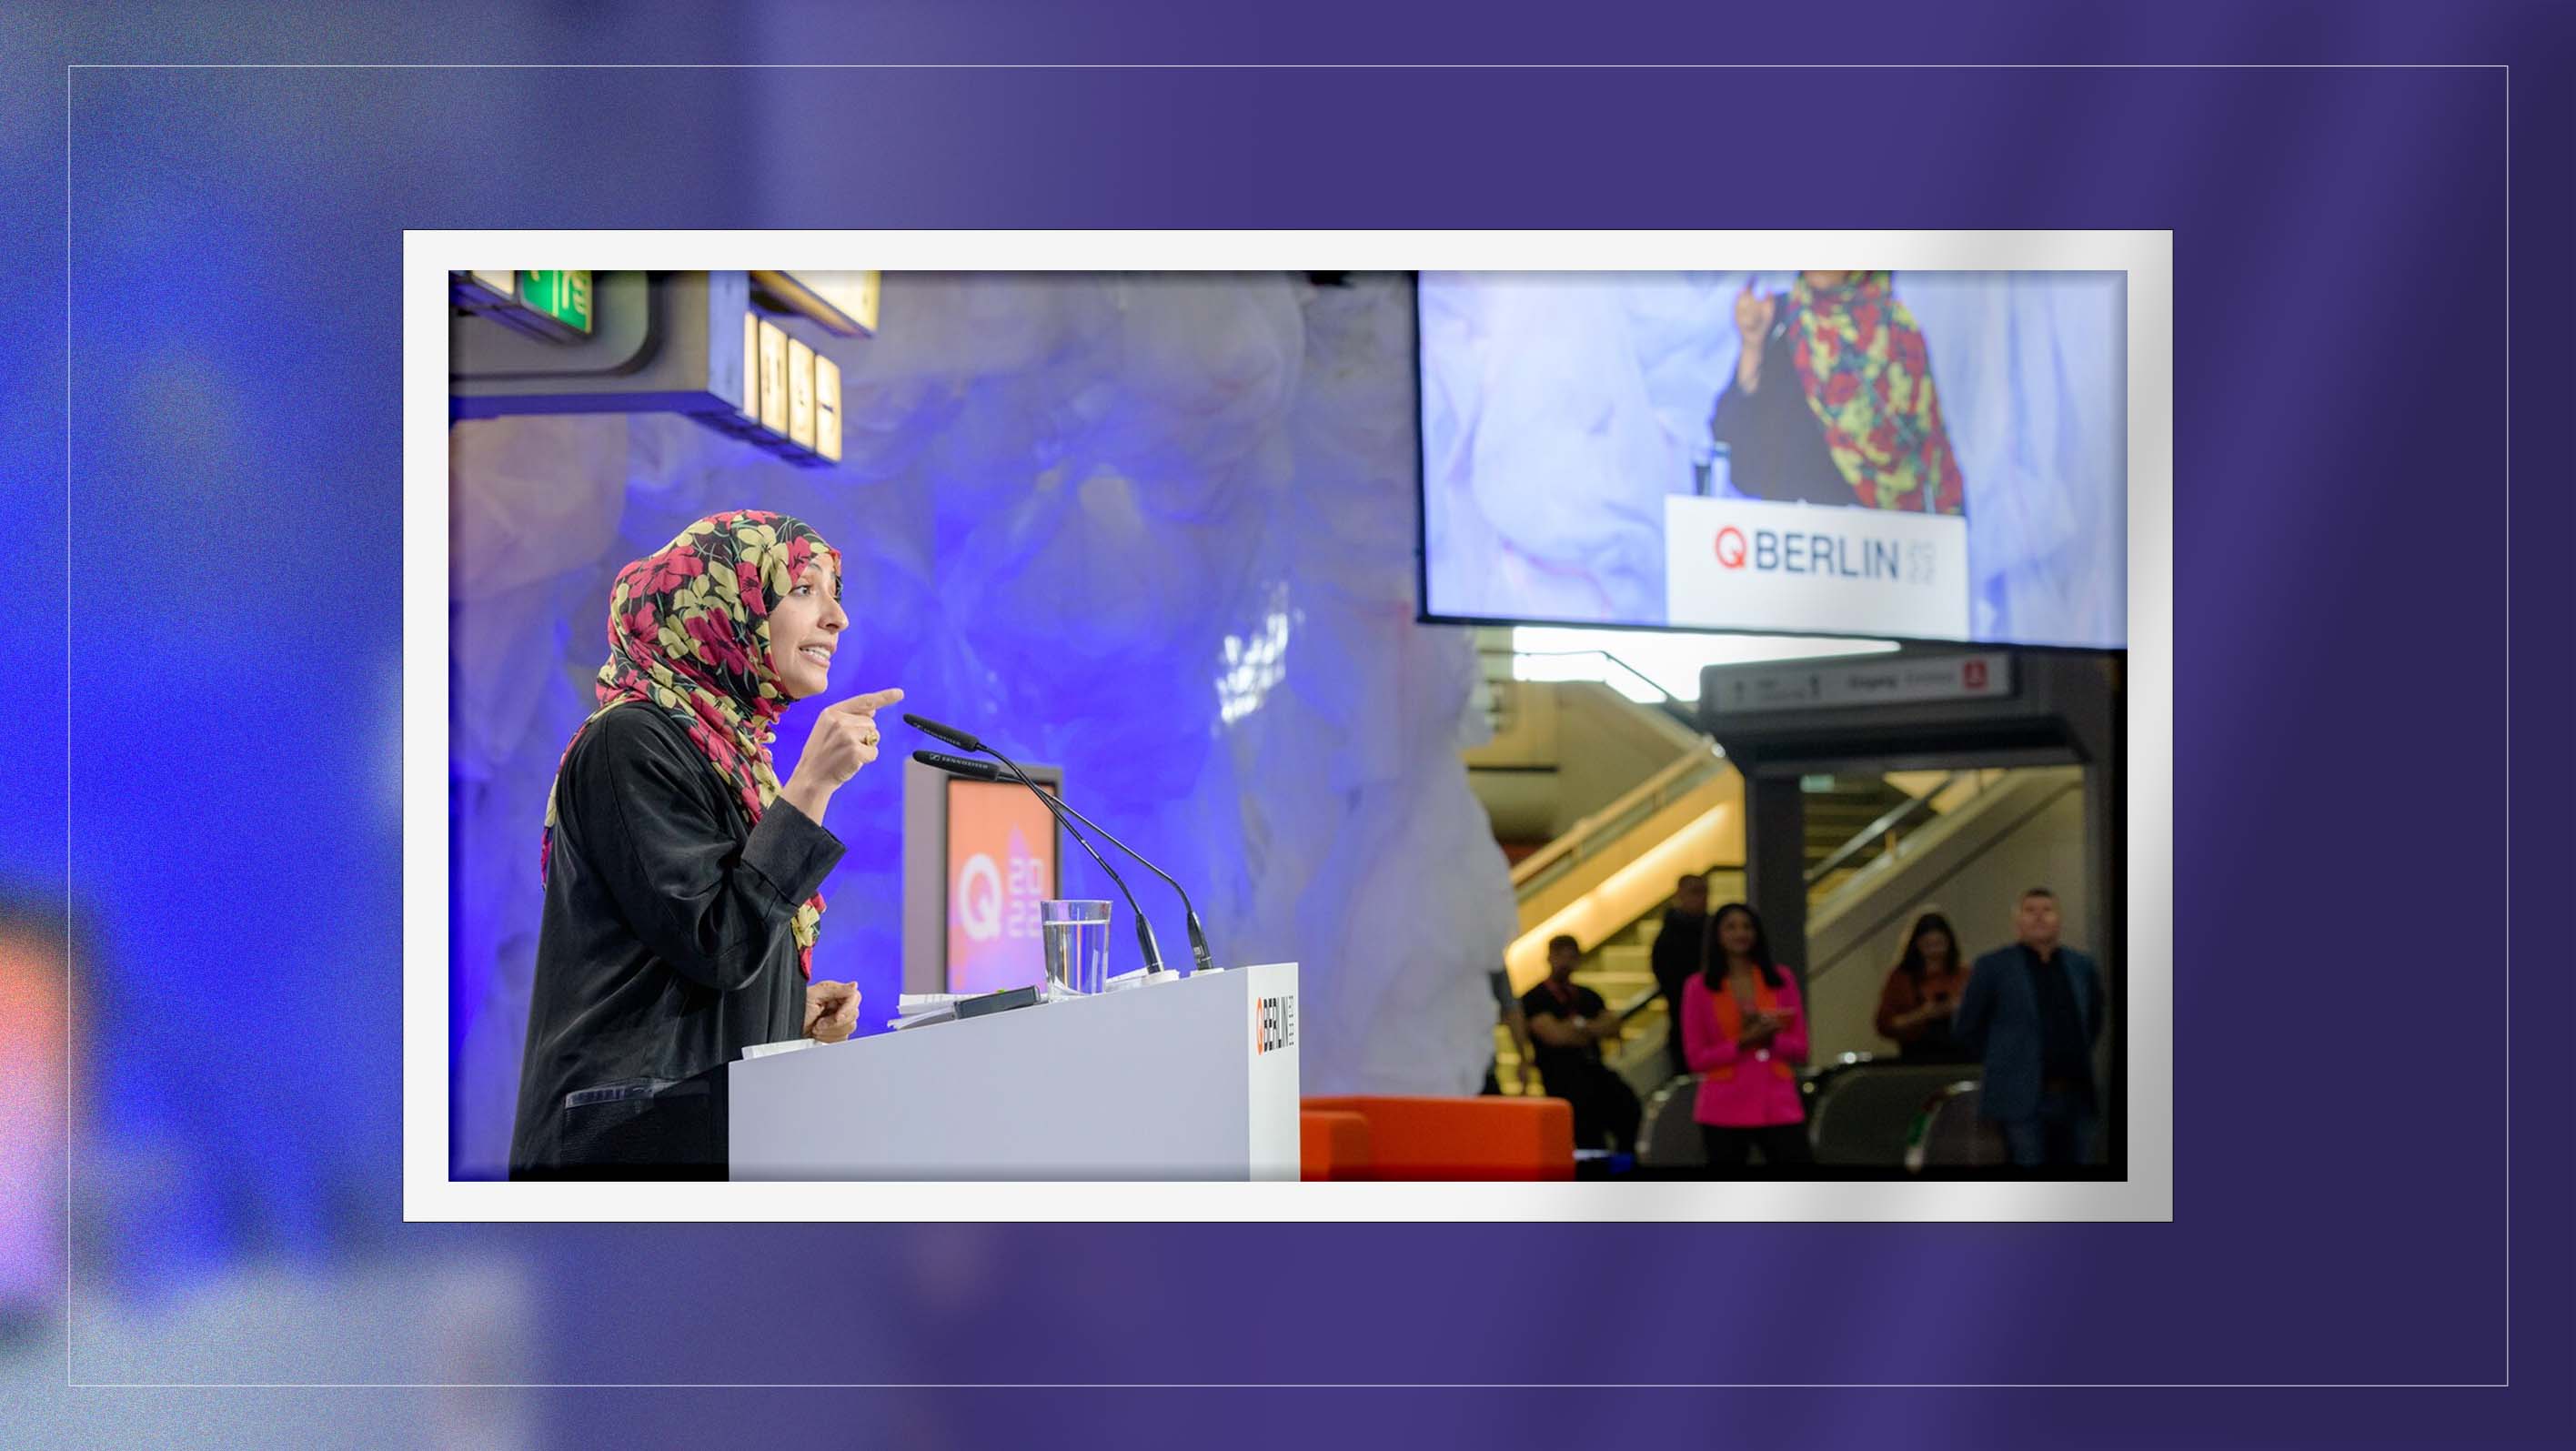 Tawakkol Karman gives speech at Berlin International Conference’s opening session